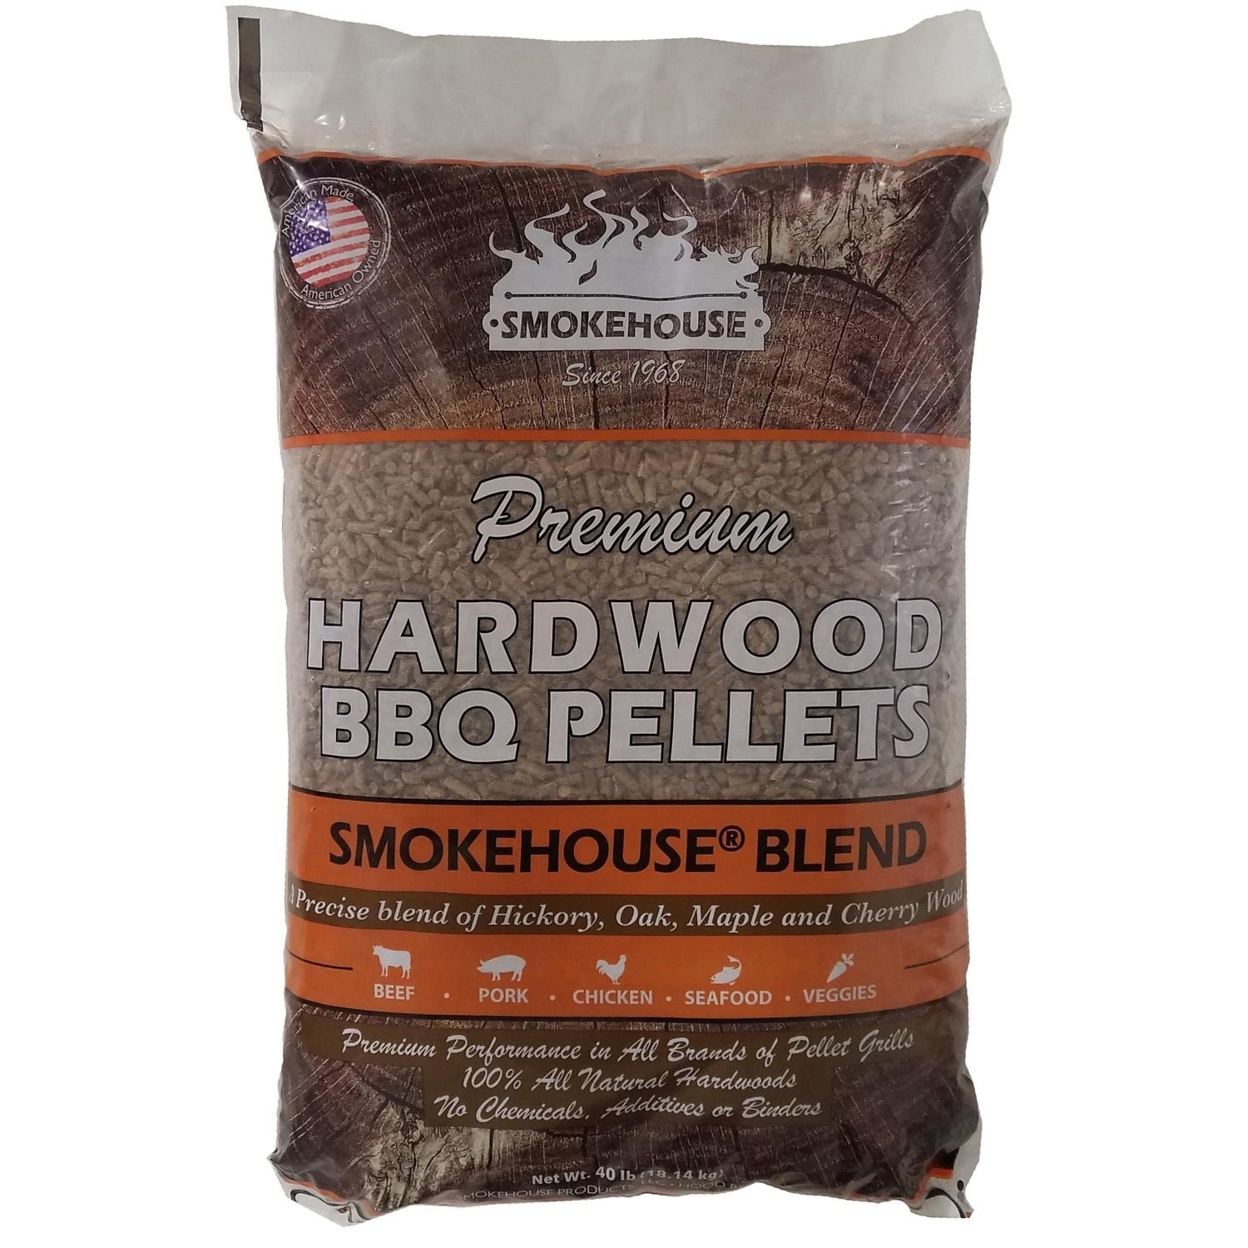 Premium Hardwood BBQ Pellets, Smokehouse Blend - 40 Pounds